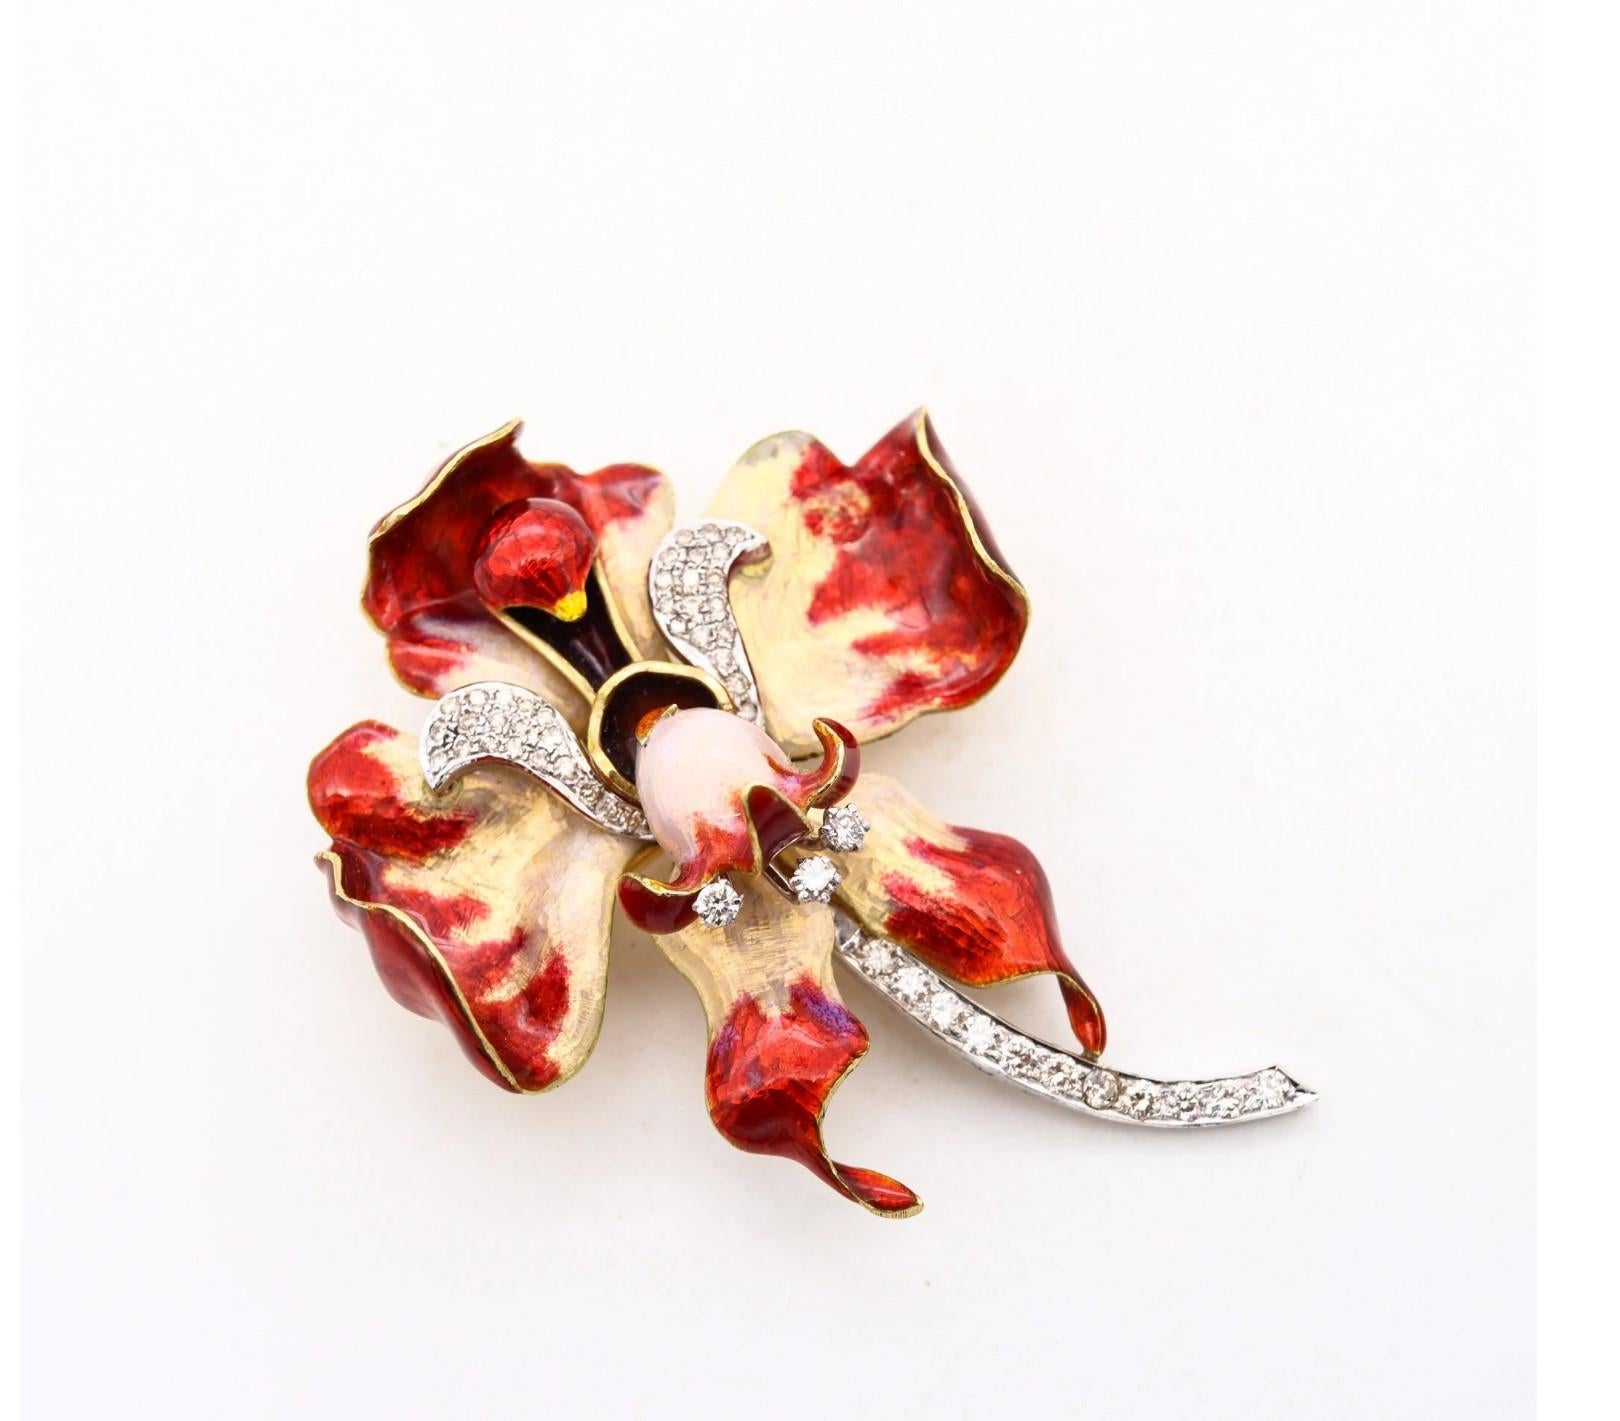 Old European Cut Art Nouveau 1880-1900 Enamel Red Orchid Brooch 18Kt Gold Platinum with Diamonds